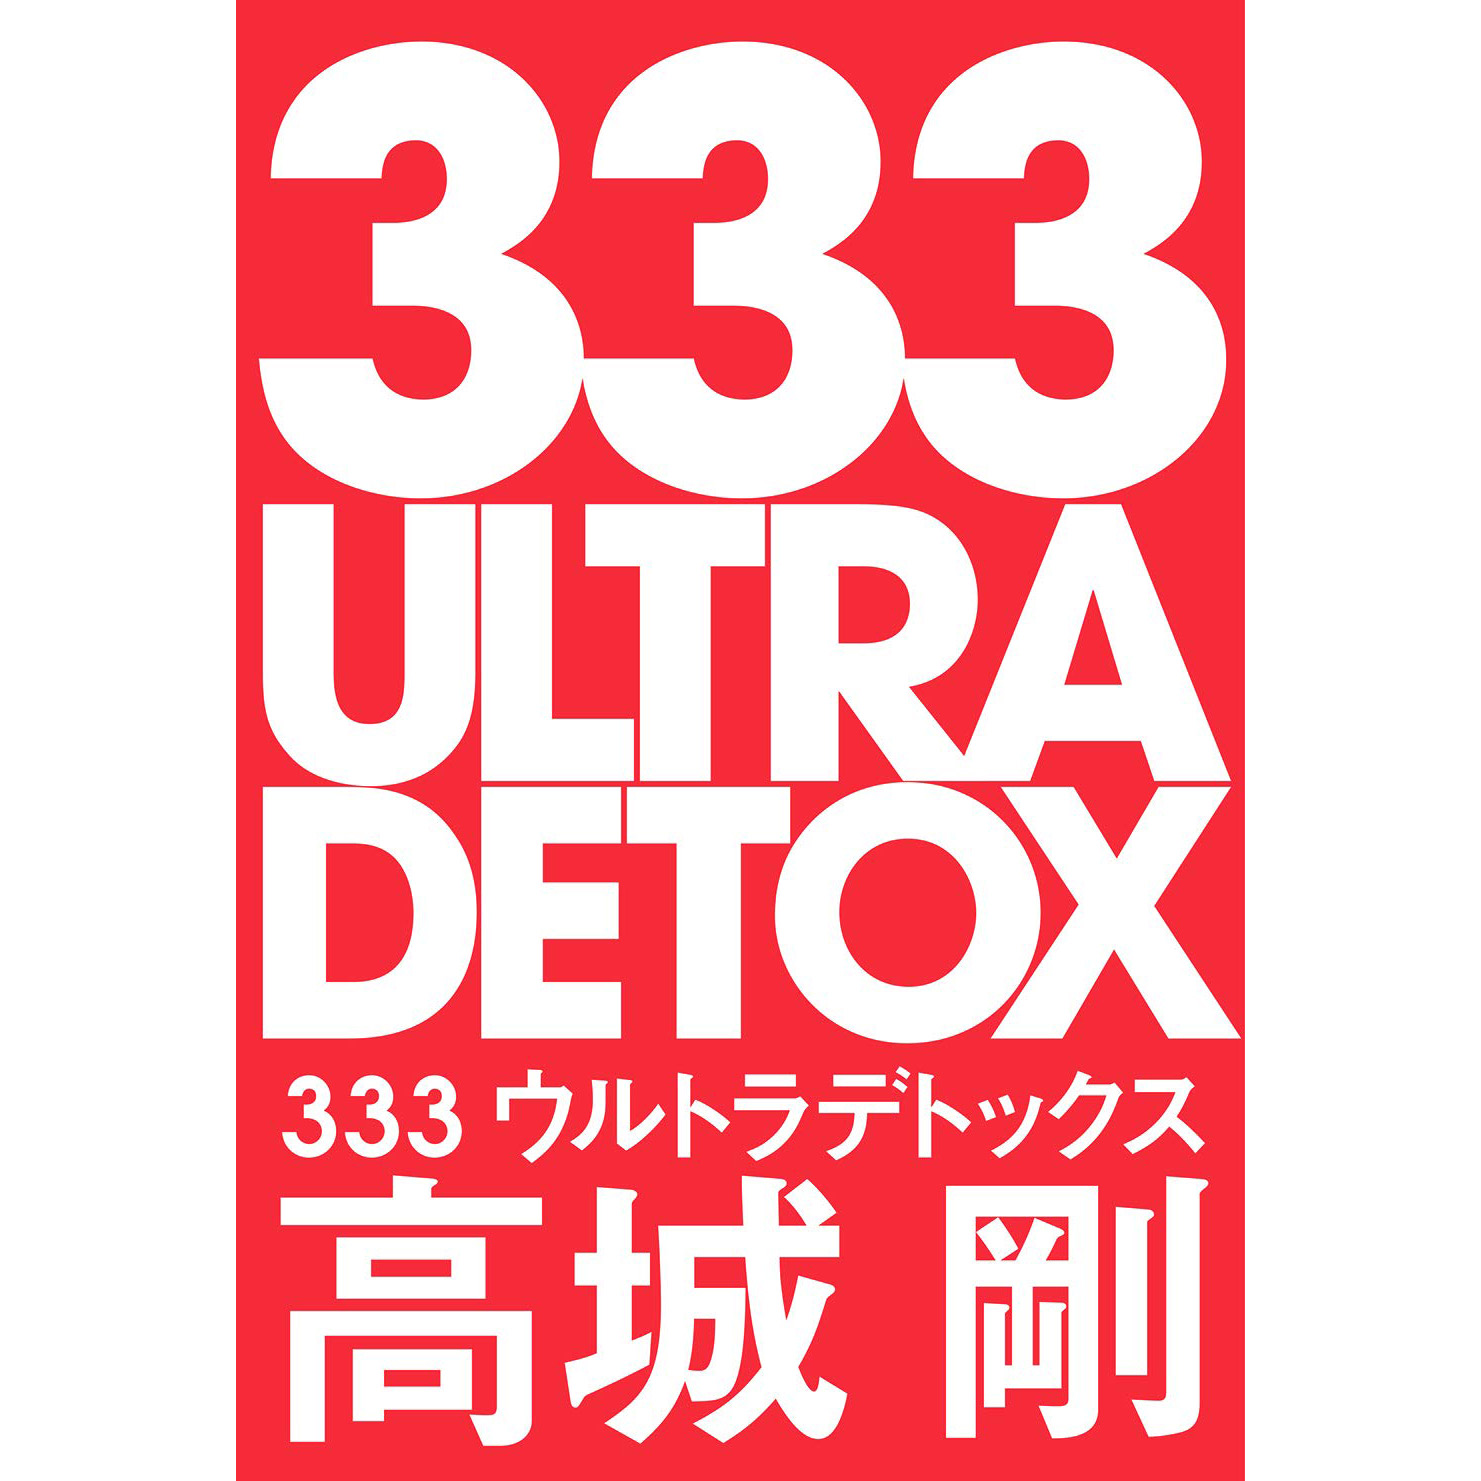 333 Ultra Detox - 高城剛